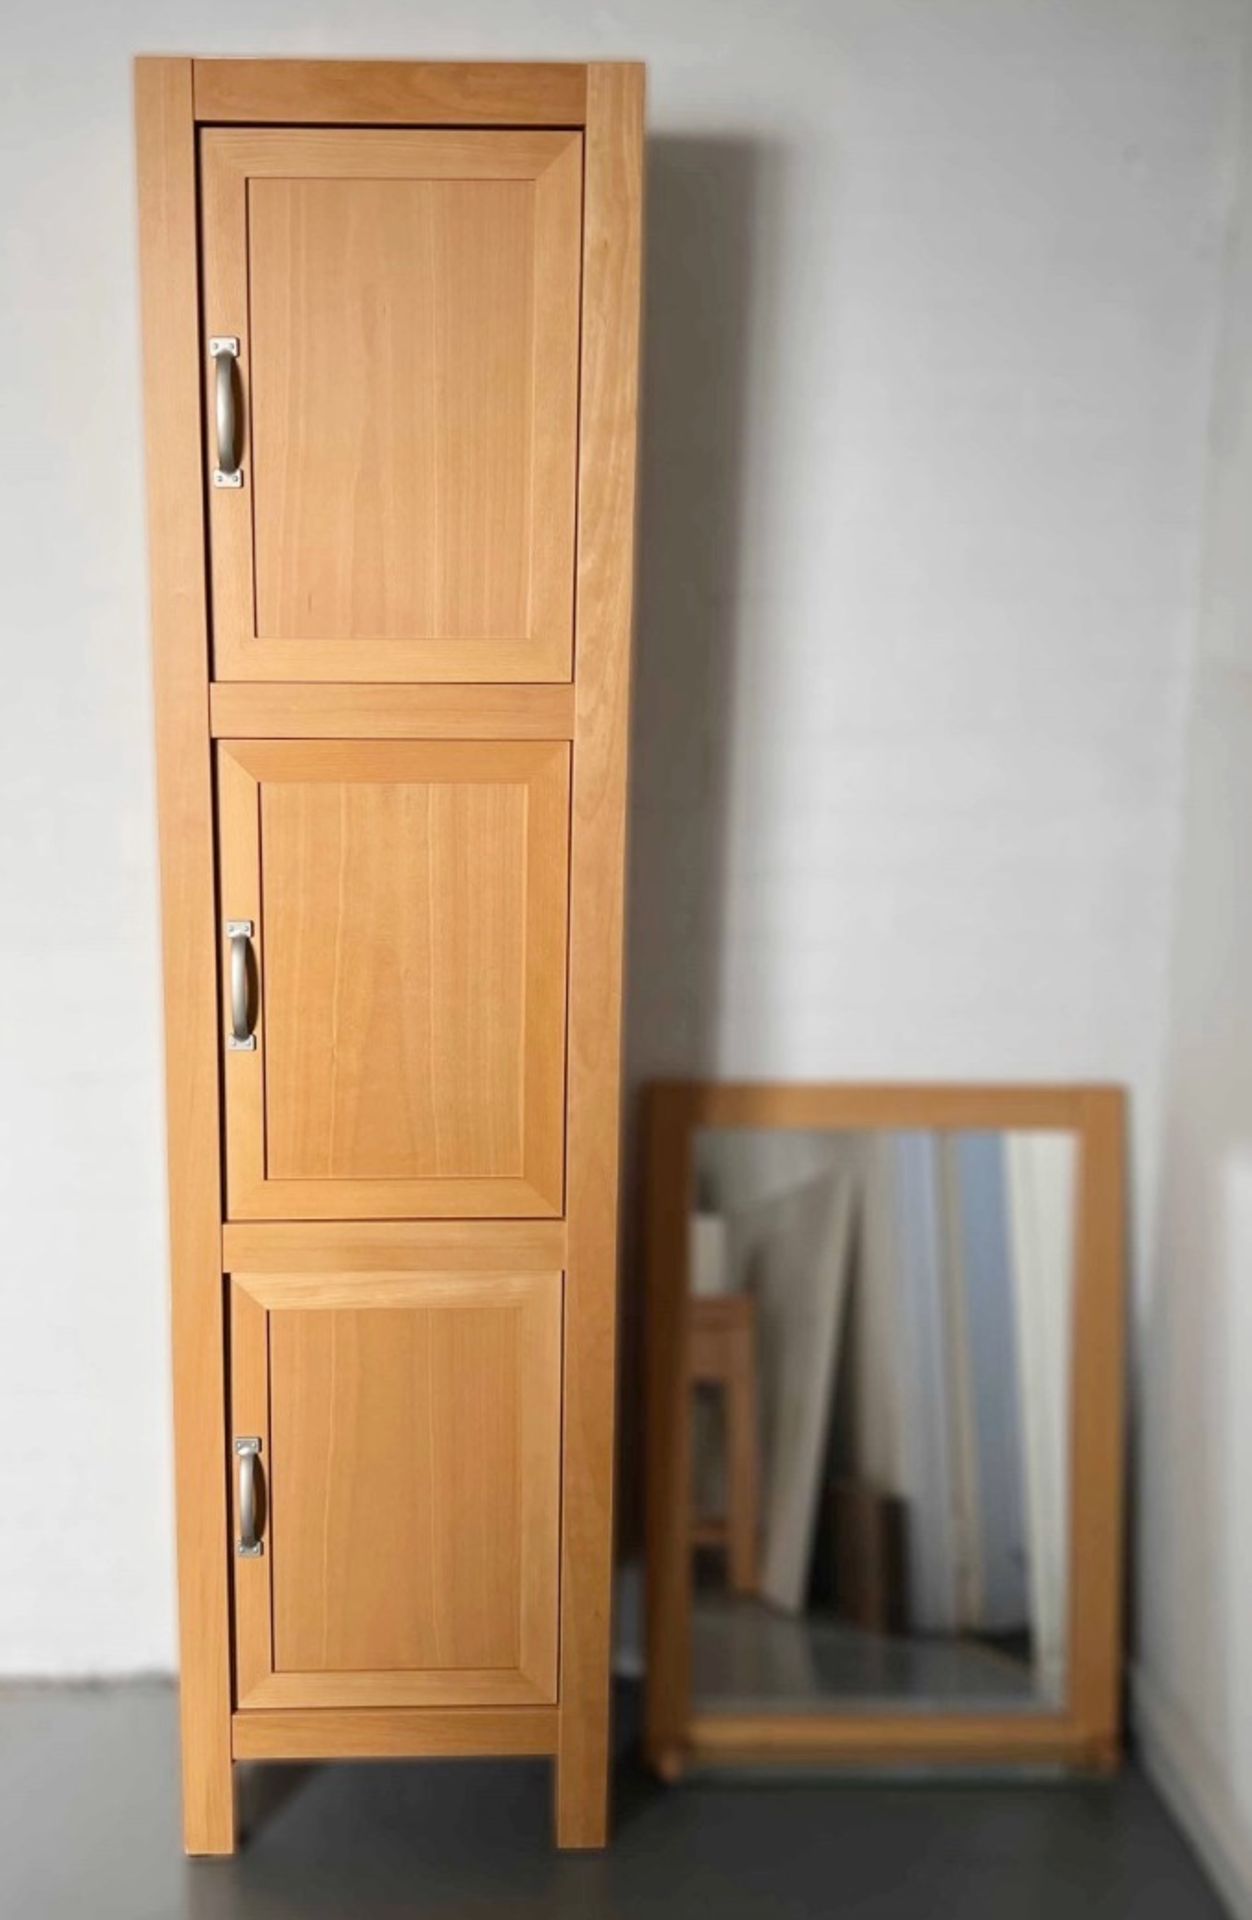 1 x VILLEROY & BOCH 3-Door Tallboy Bathroom Storage Cabinet With Matching Mirror - NO VAT ON THE